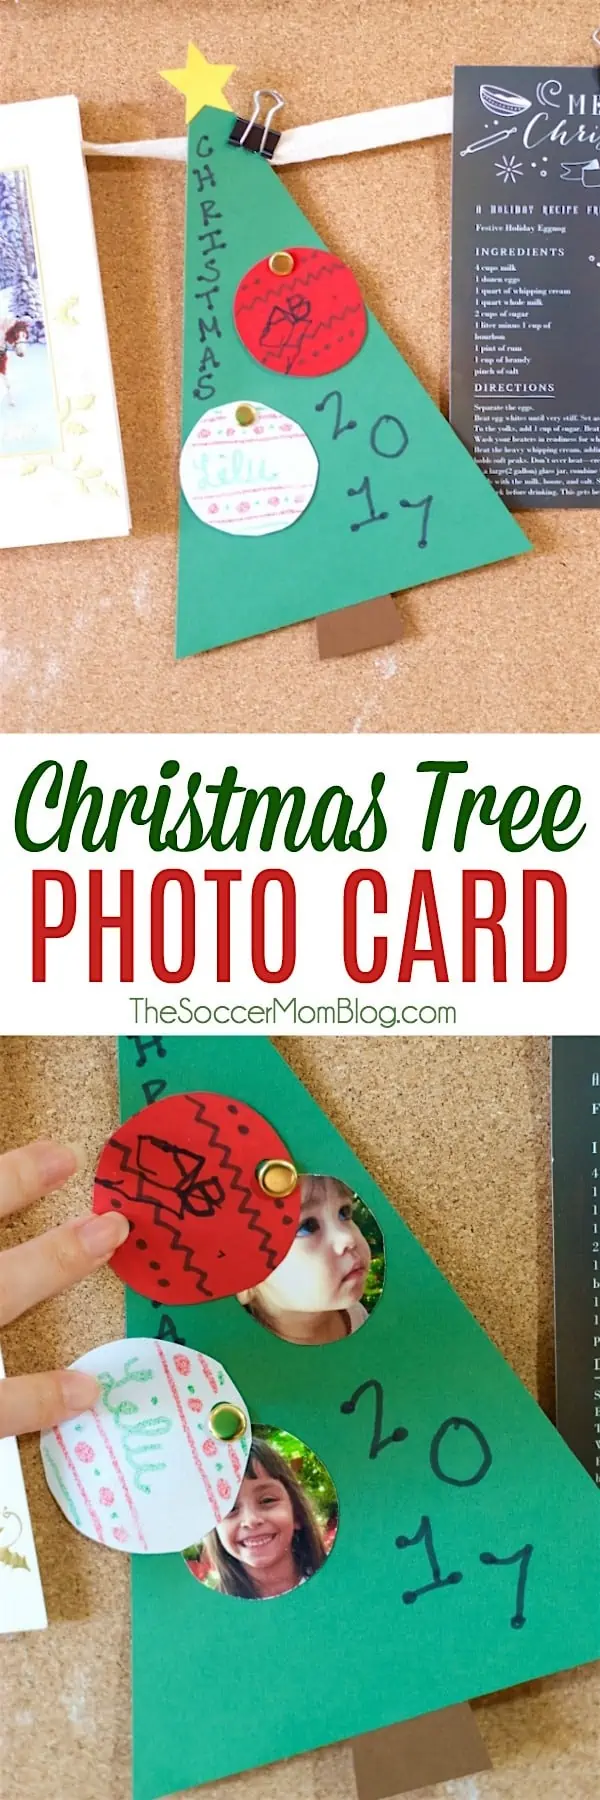 Christmas tree photo card